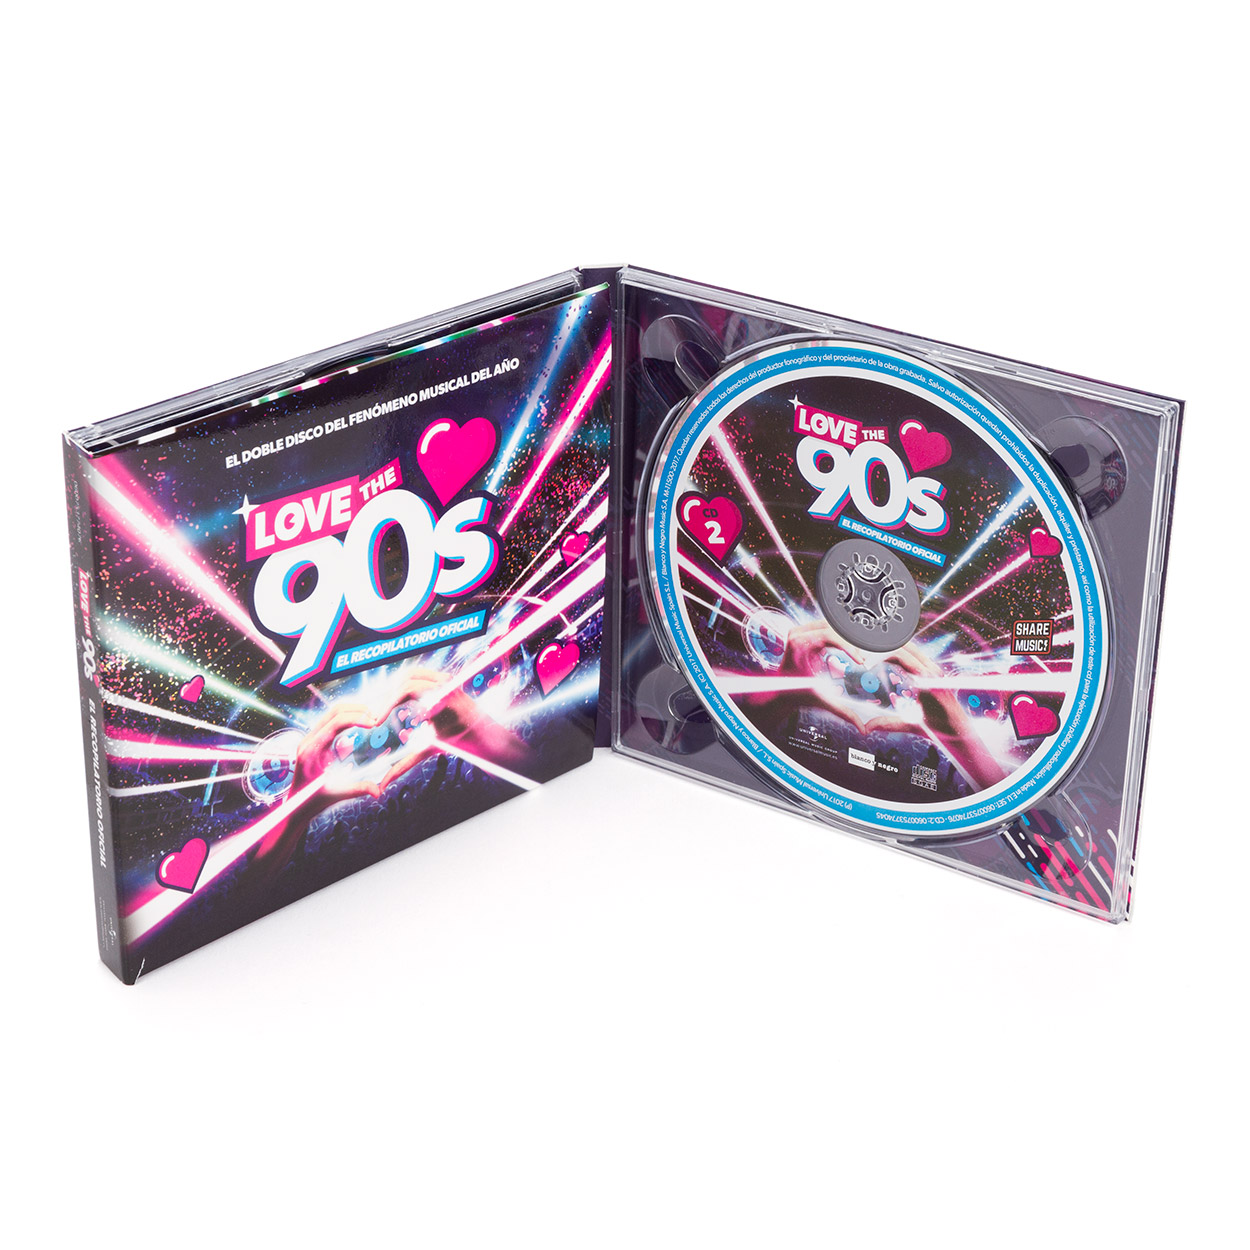 lanzador Carrera Presa Love The 90s - Tienda - CD Recopilatorio Love The 90's Vol. 2